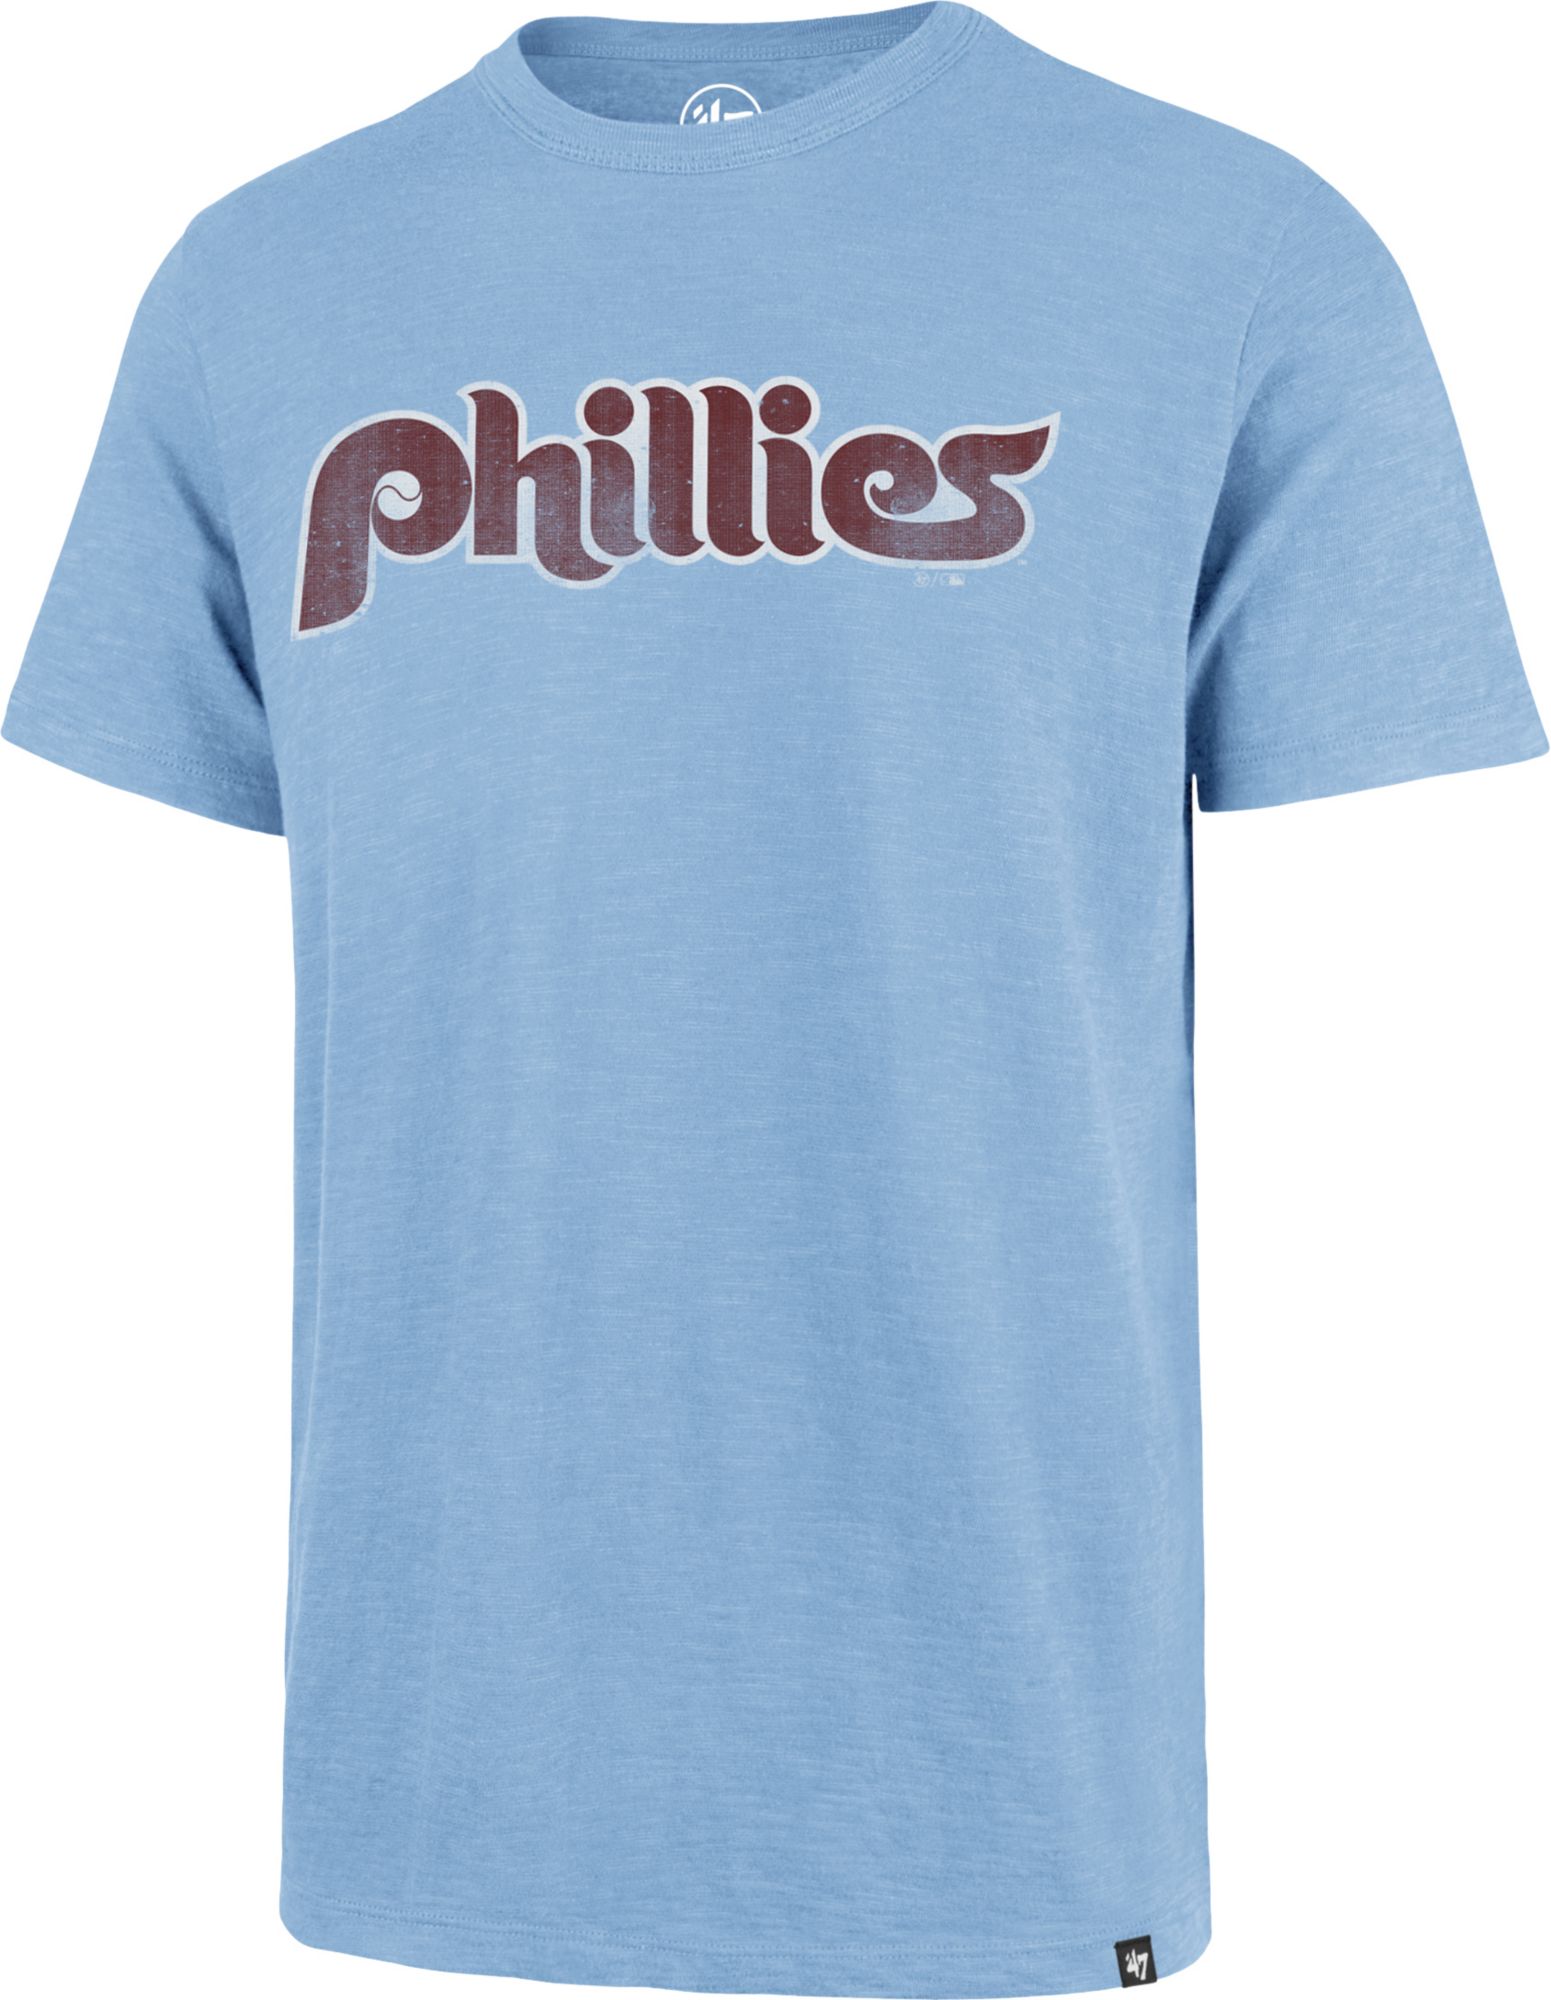 47 Phillies Wordmark Club Short Sleeve T Shirt